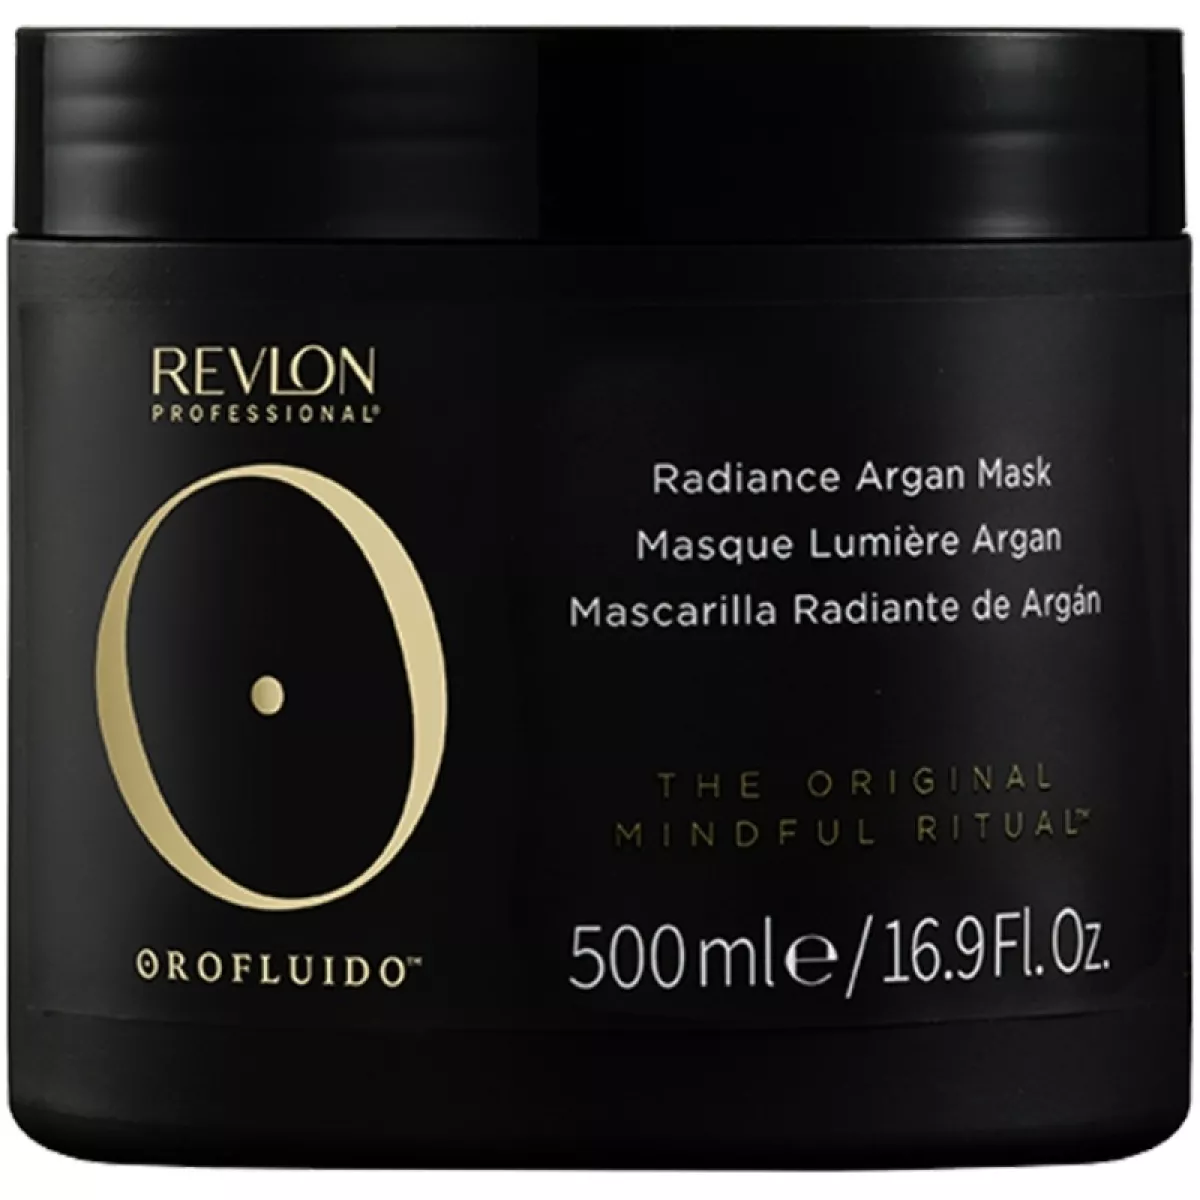 #1 - Revlon Orofluido Radiance Argan Mask 500 ml (Limited Edition)